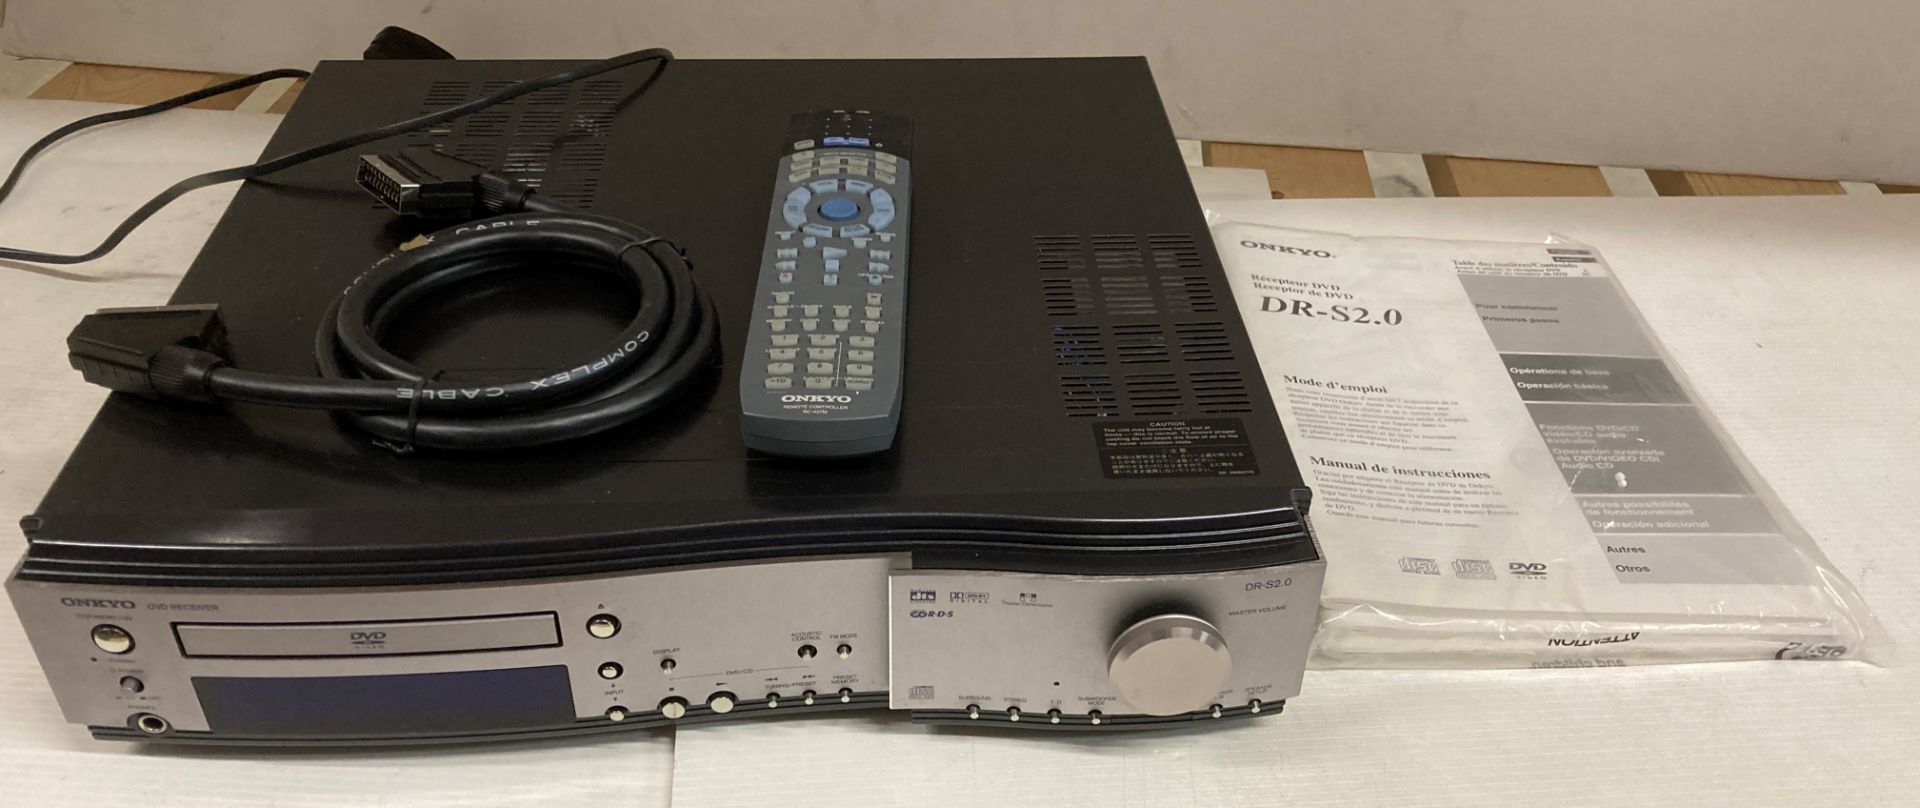 Onkyo DVD receiver DR-S2.